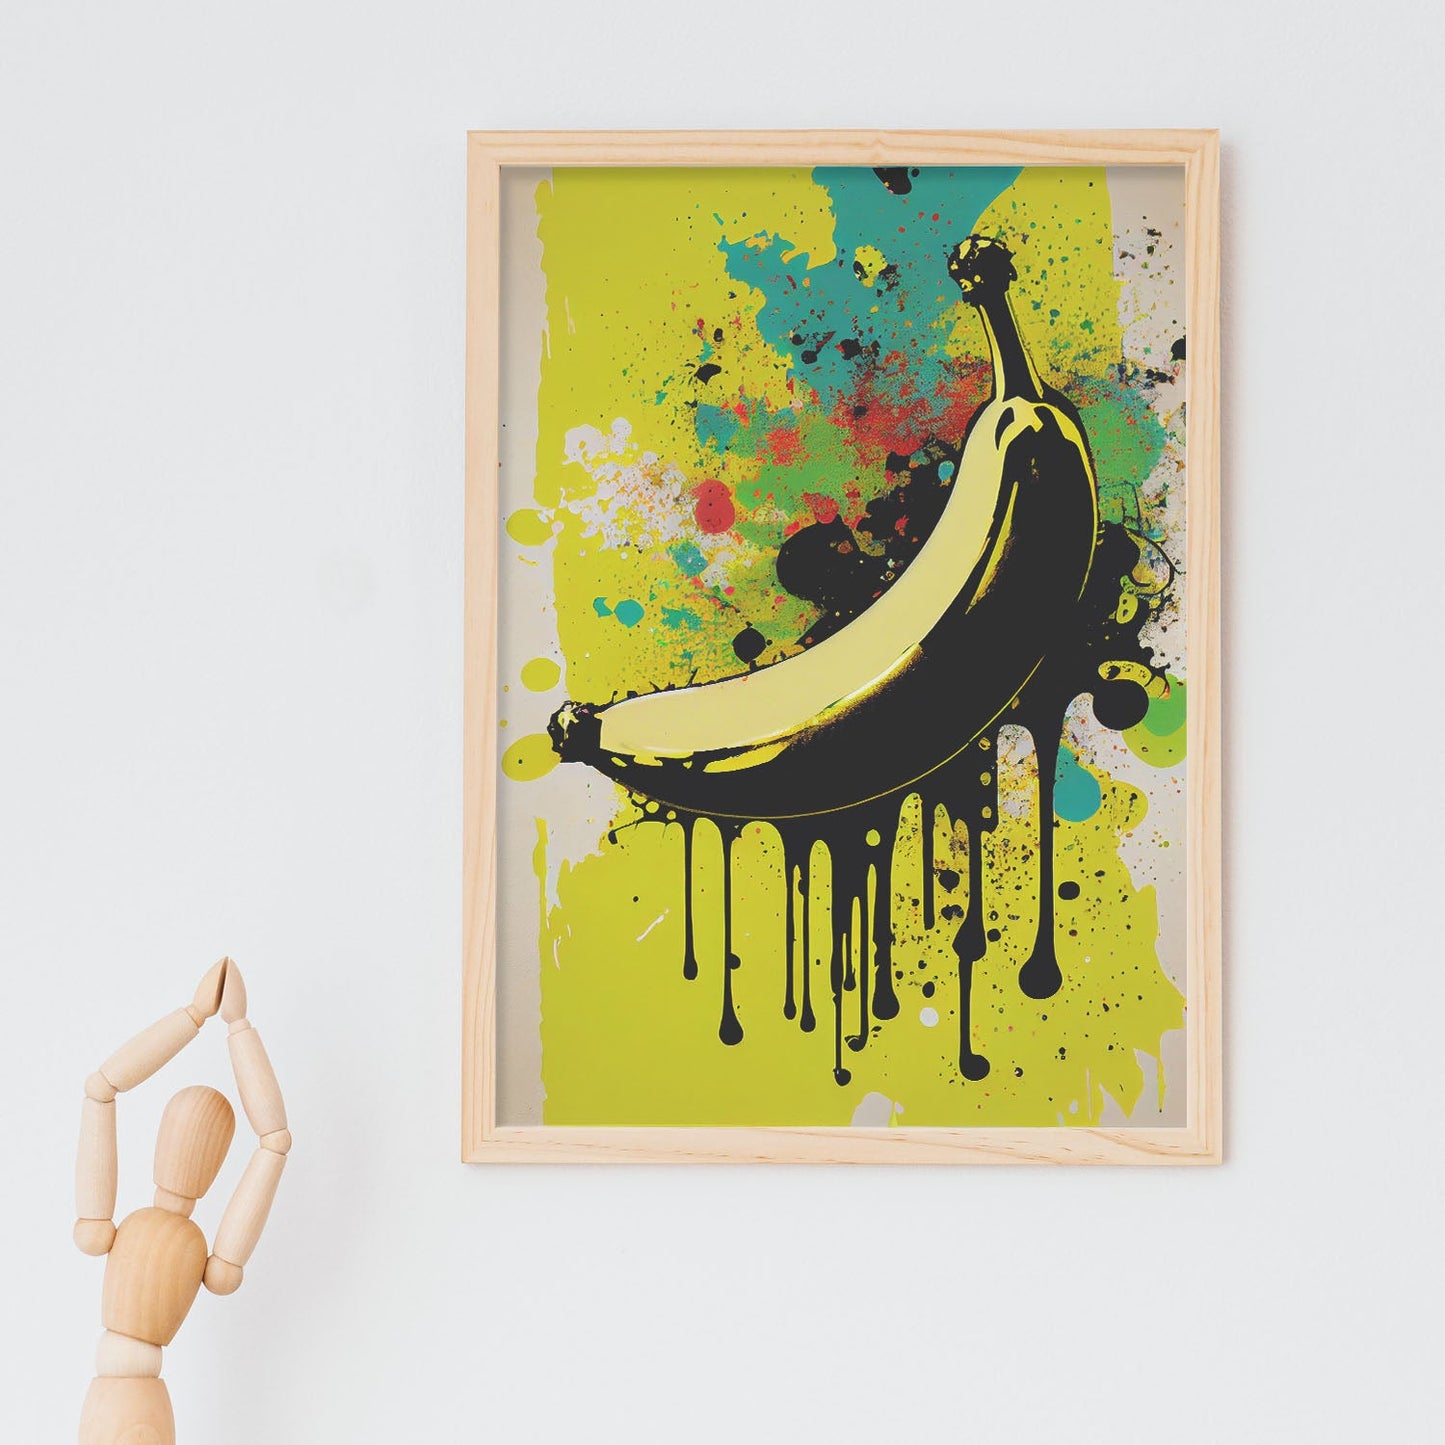 Nacnic banana Pop Art_2. Aesthetic Wall Art Prints for Bedroom or Living Room Design.